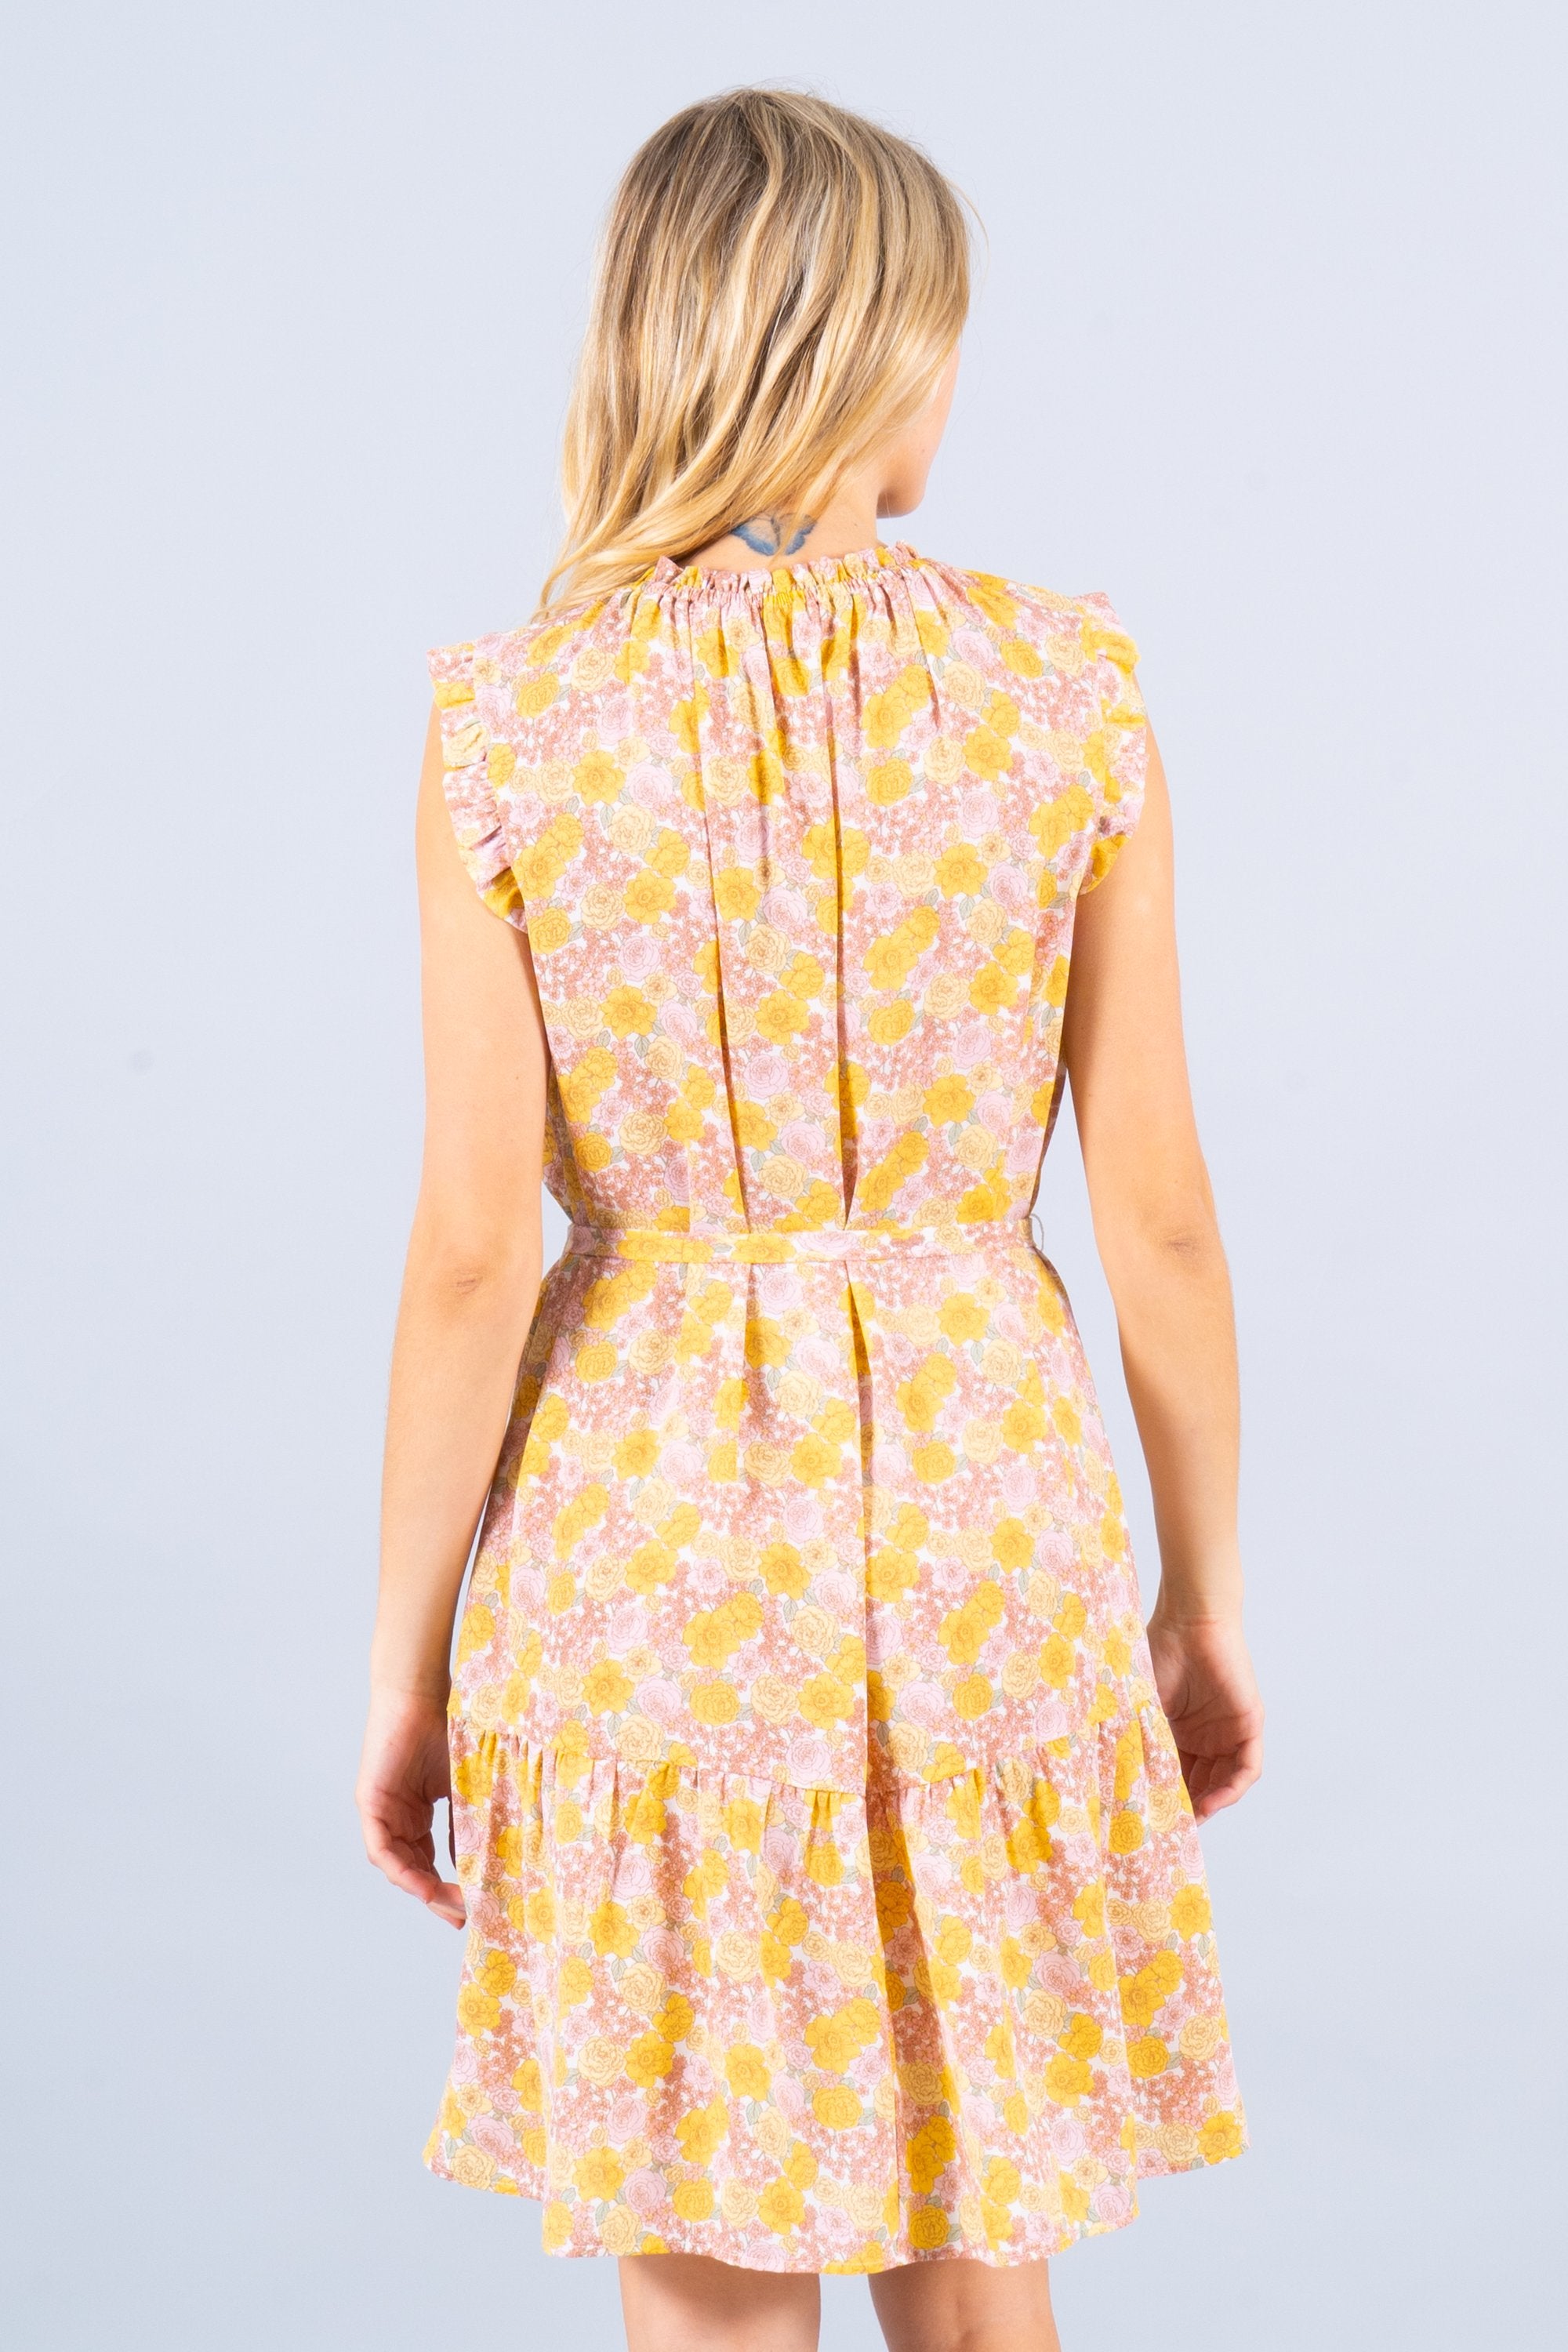 Buy Floral Print Sleeveless Dress with Tie by Tan Hephaestus